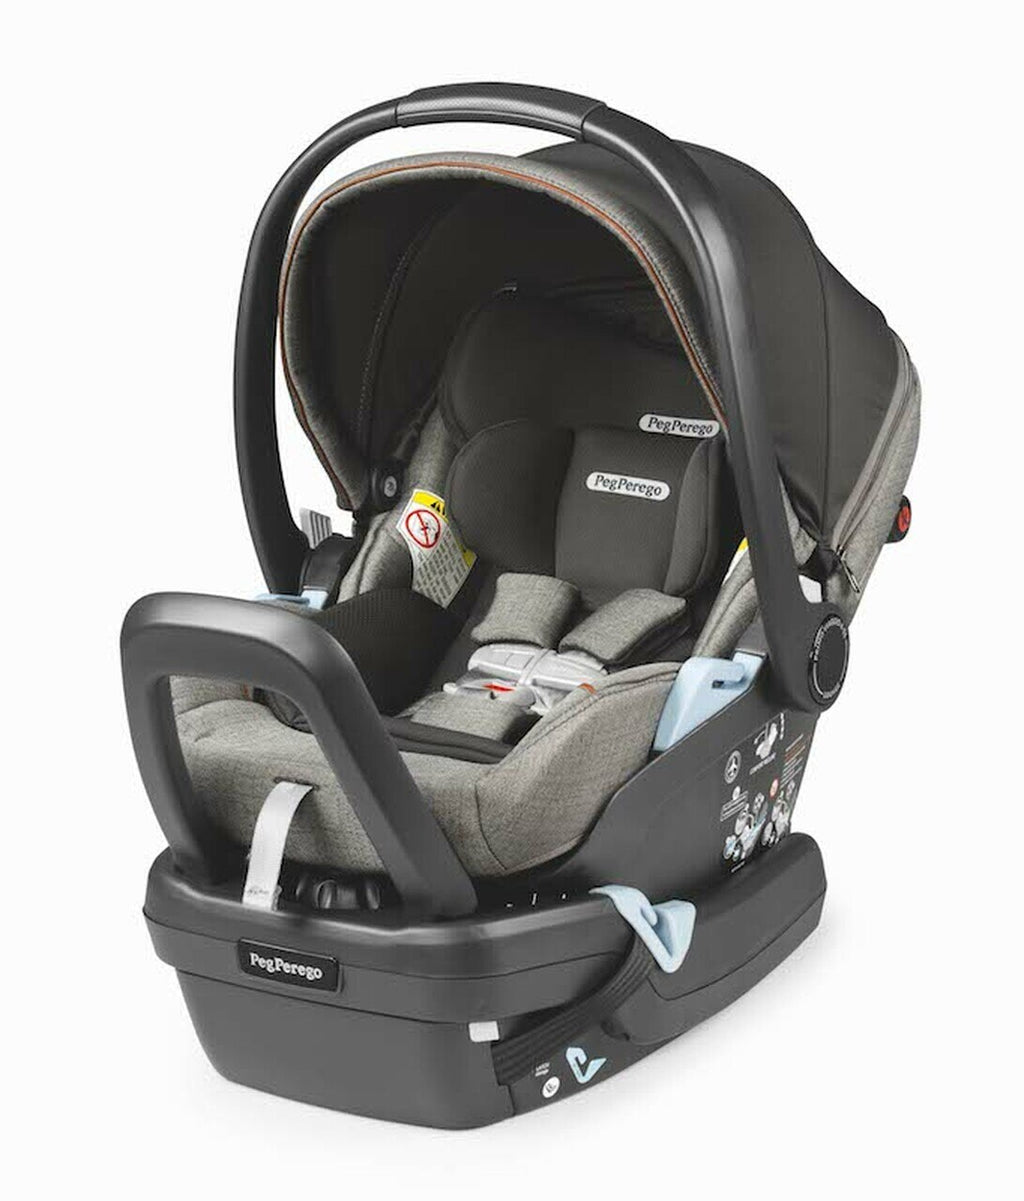 AGIO BABY PRIMO VIAGGIO 4-35 LOUNGE INFANT CAR SEAT